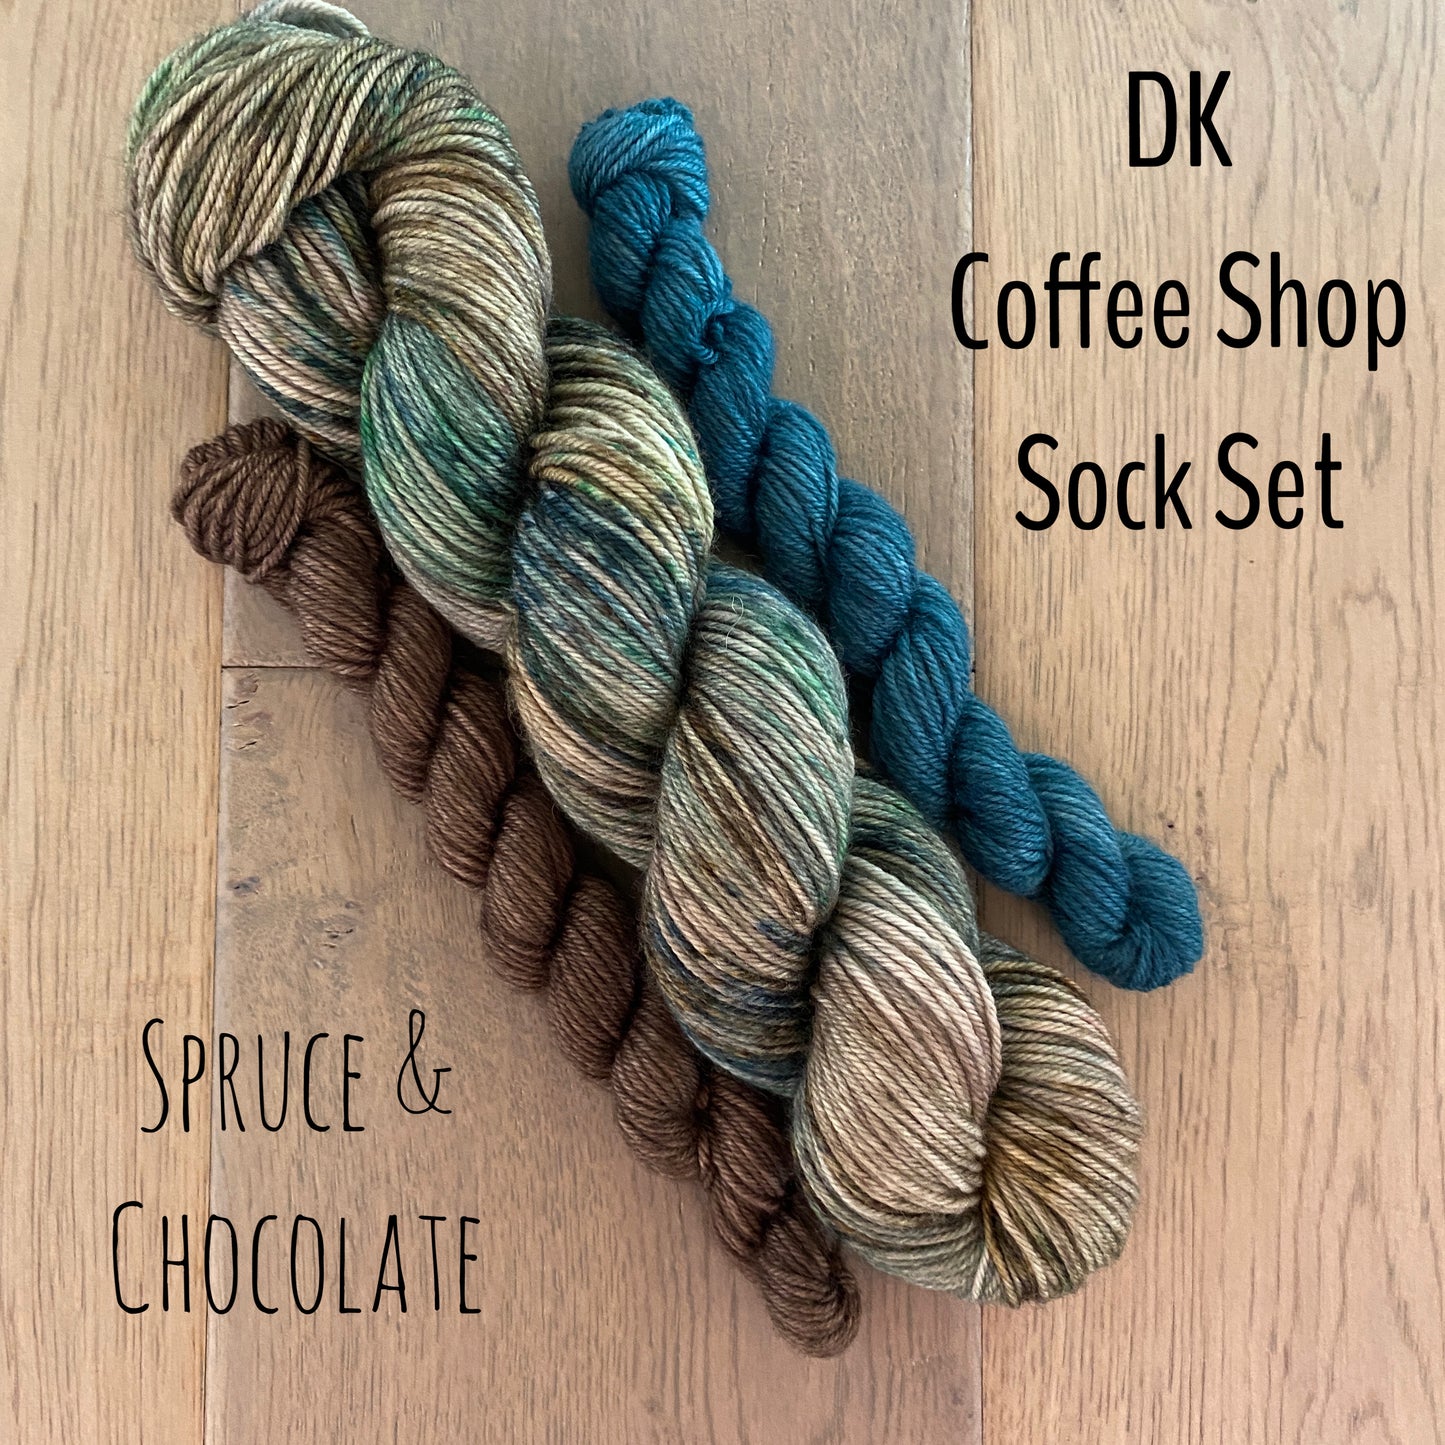 DK Coffee Shop Sock Set